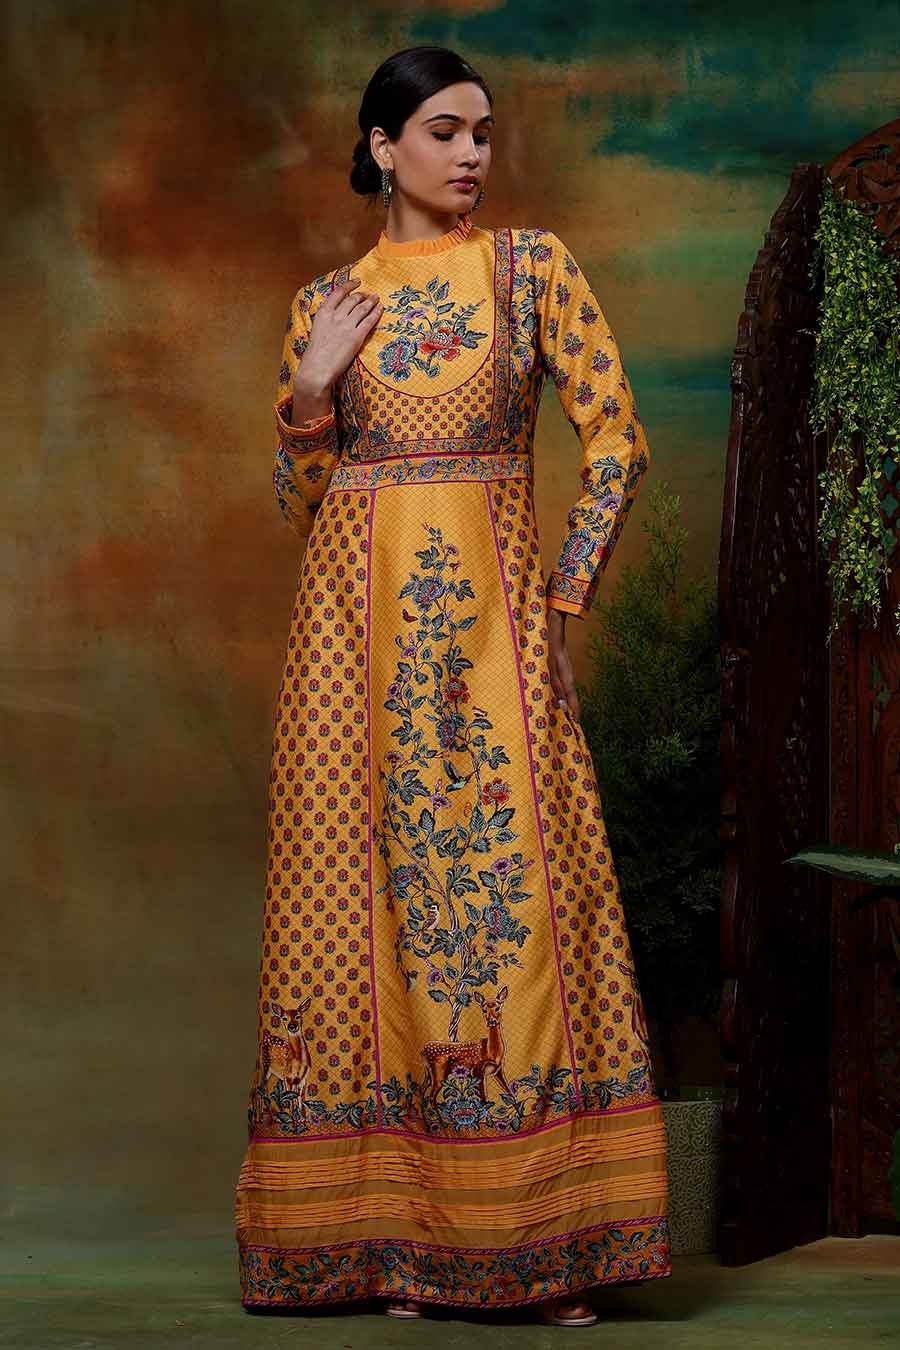 Swarn Hiran Ghera Dress